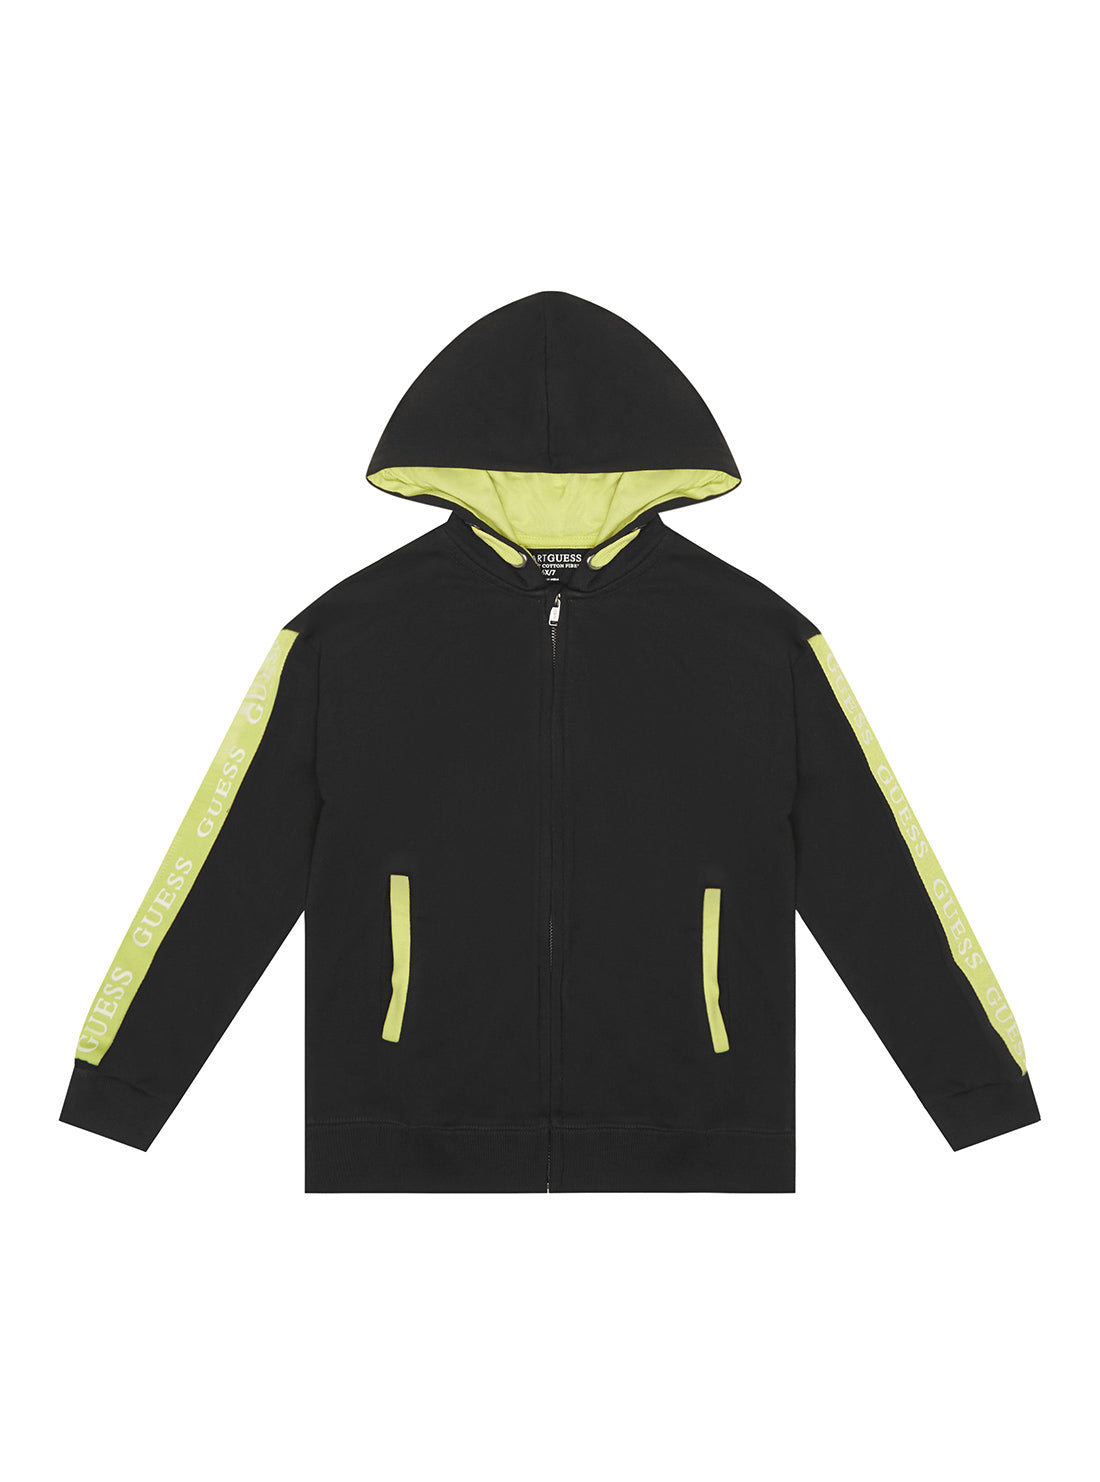 GUESS Kids Big Boy Lime Black Logo Hooded Zip Jacket (7-16) L2RQ01KA6R0 Front View